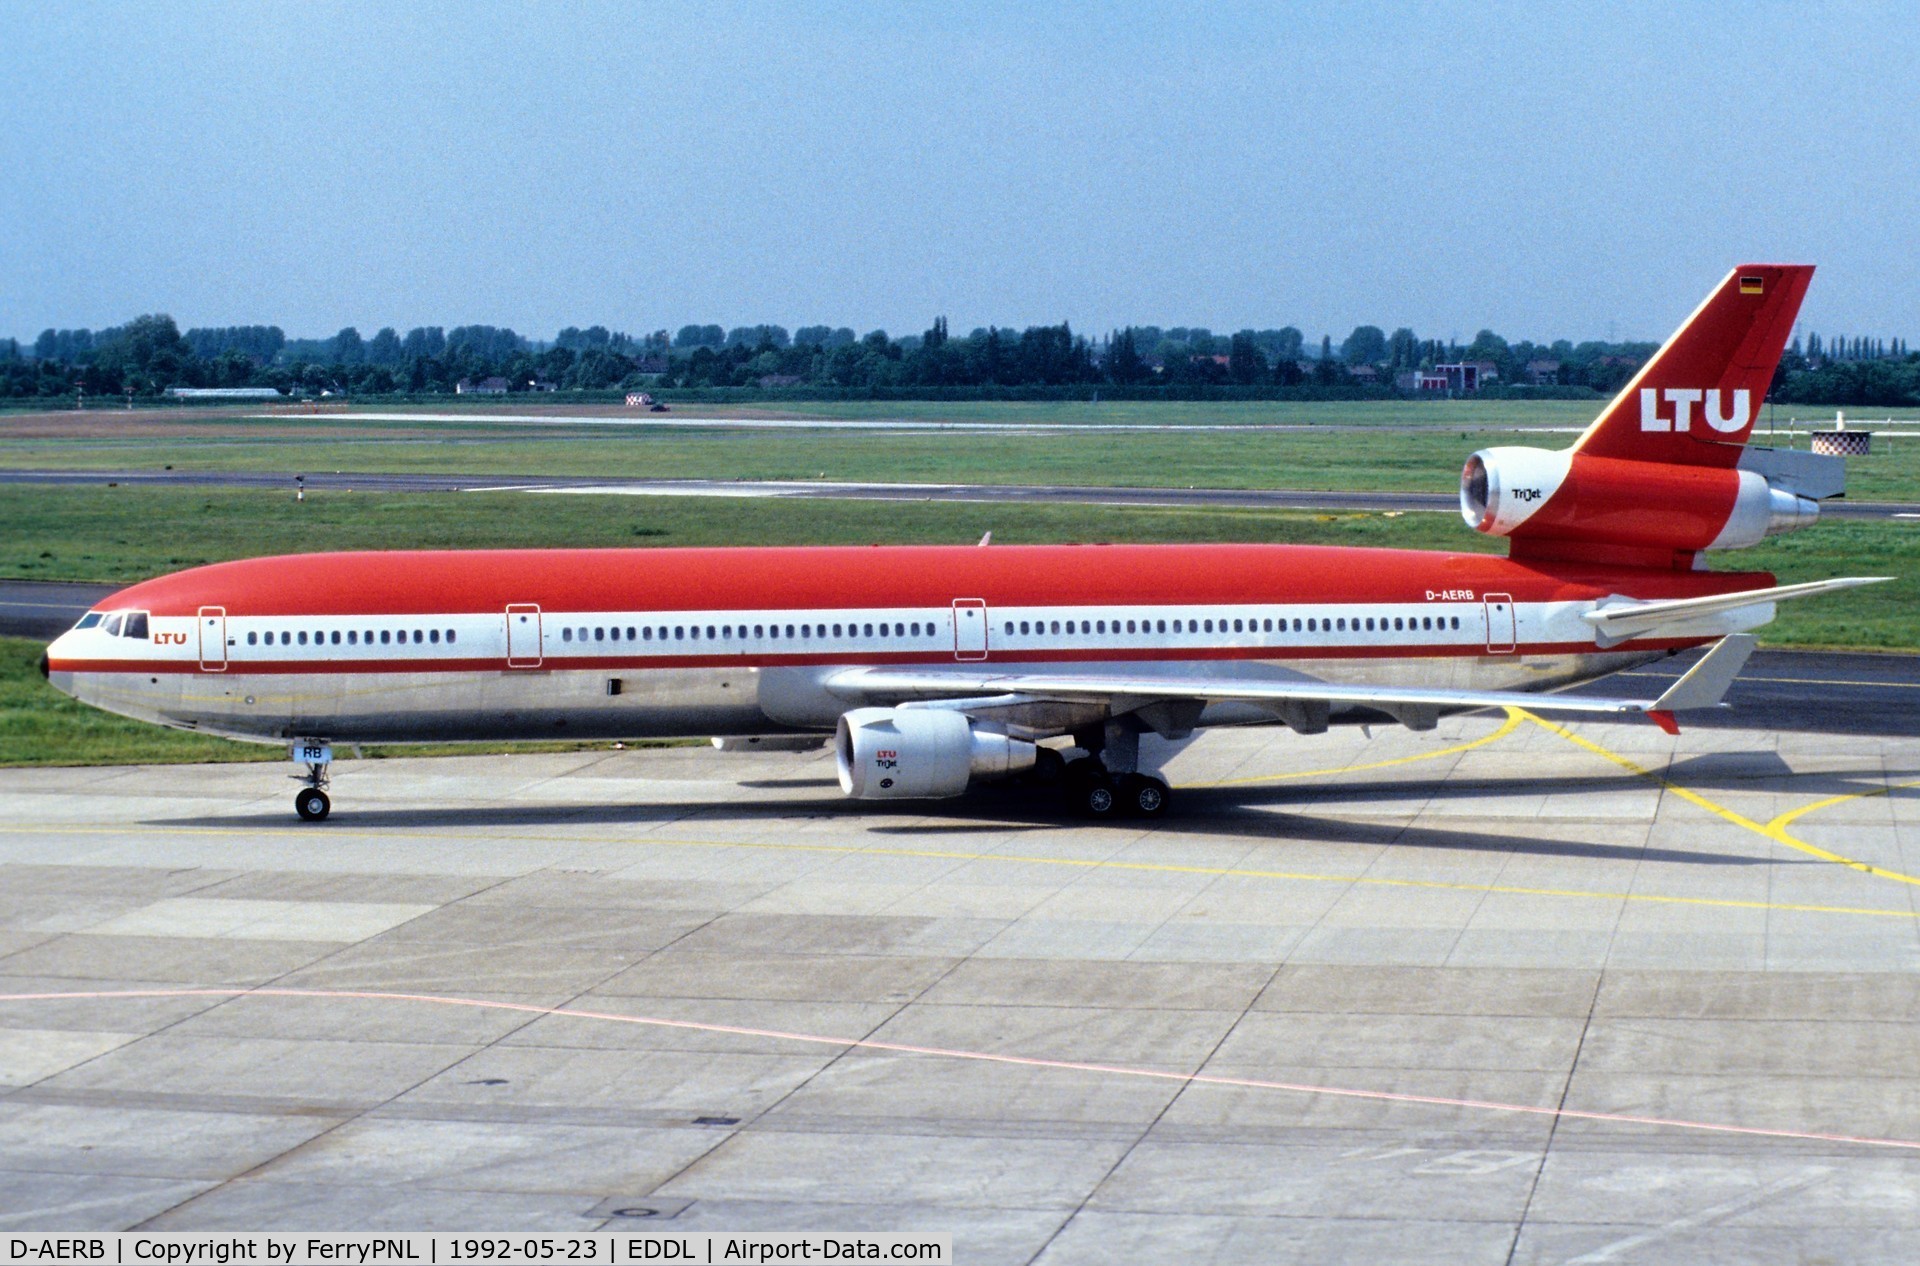 D-AERB, 1991 McDonnell Douglas MD-11F C/N 48484, LTU MD11 arriving